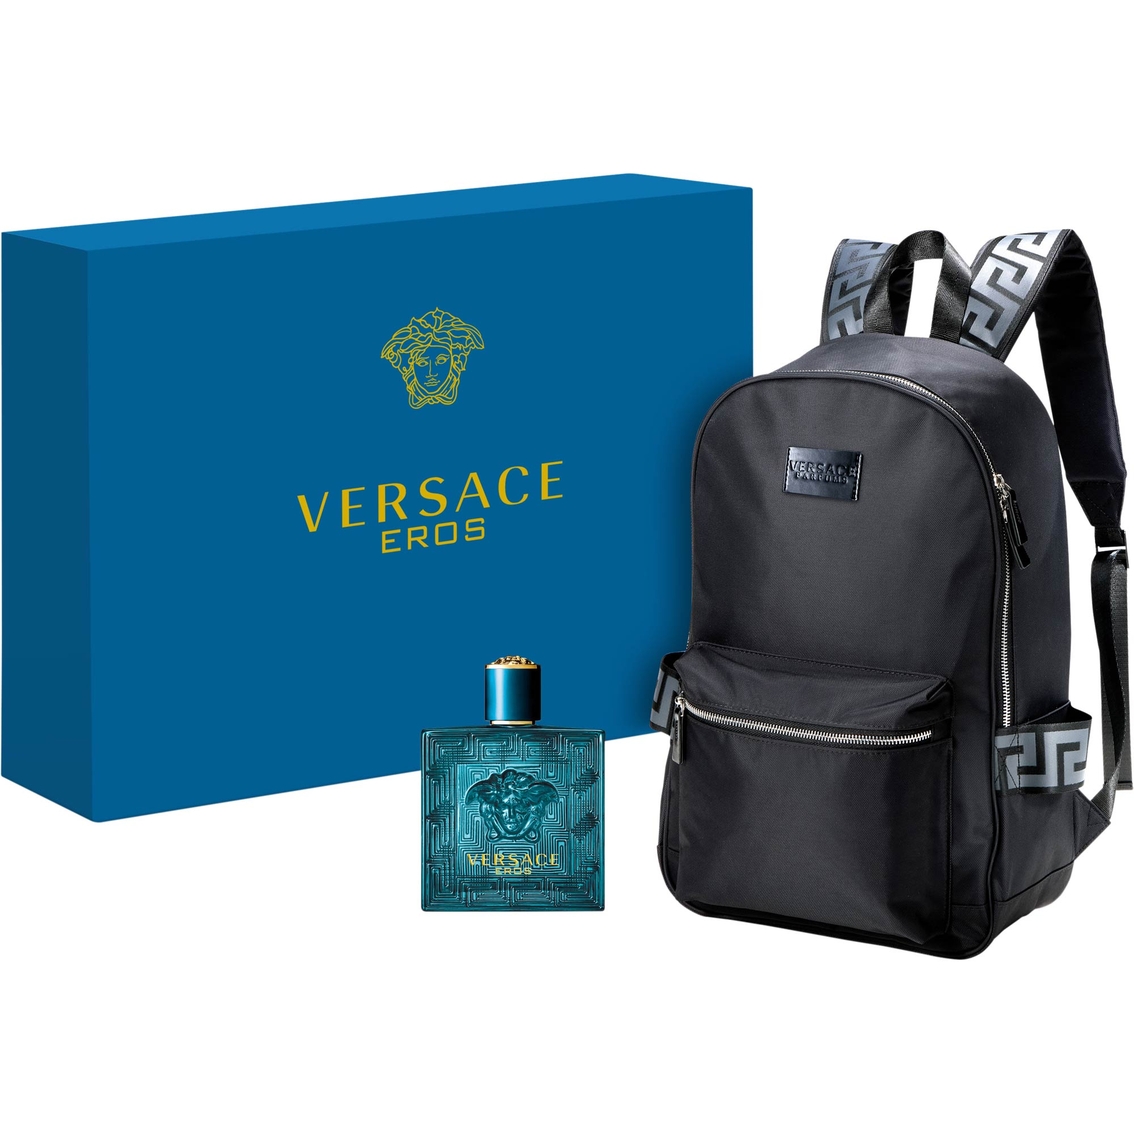 Versace Eros Eau De Toilette Spray With Versace Backpack | Gifts Sets ...